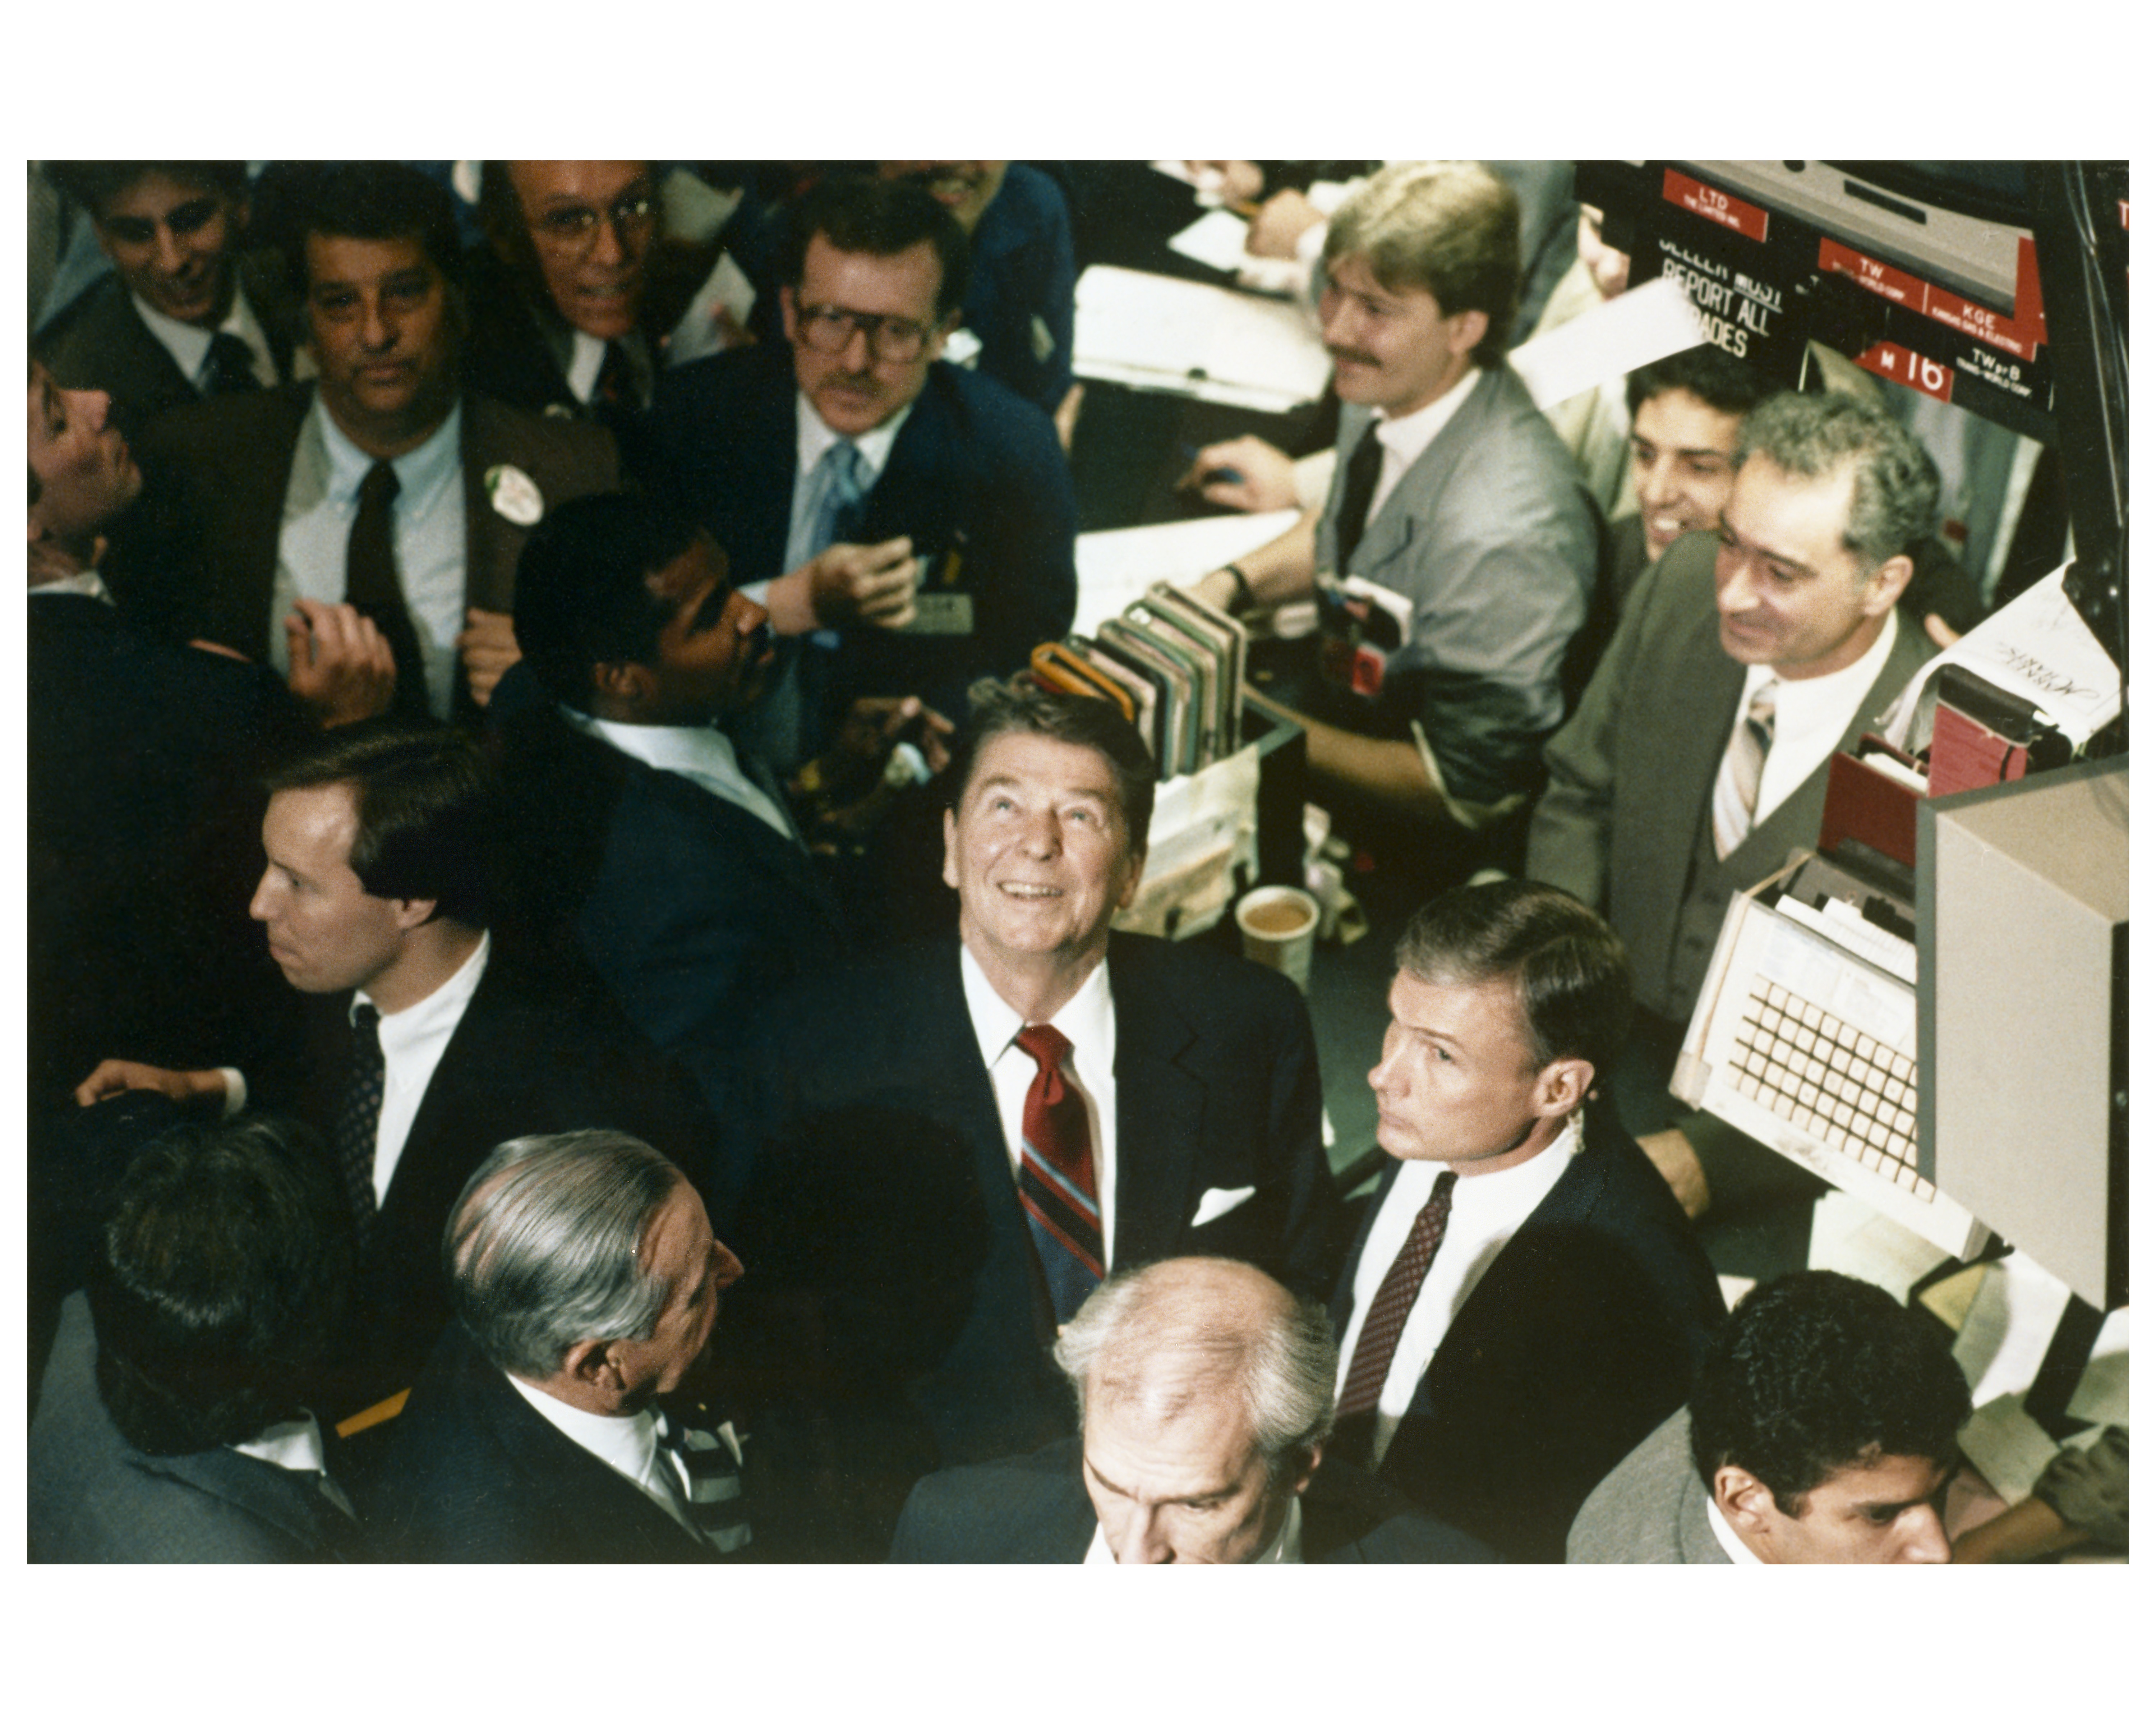 Ronald Reagan visiting the NYSE in 1985.